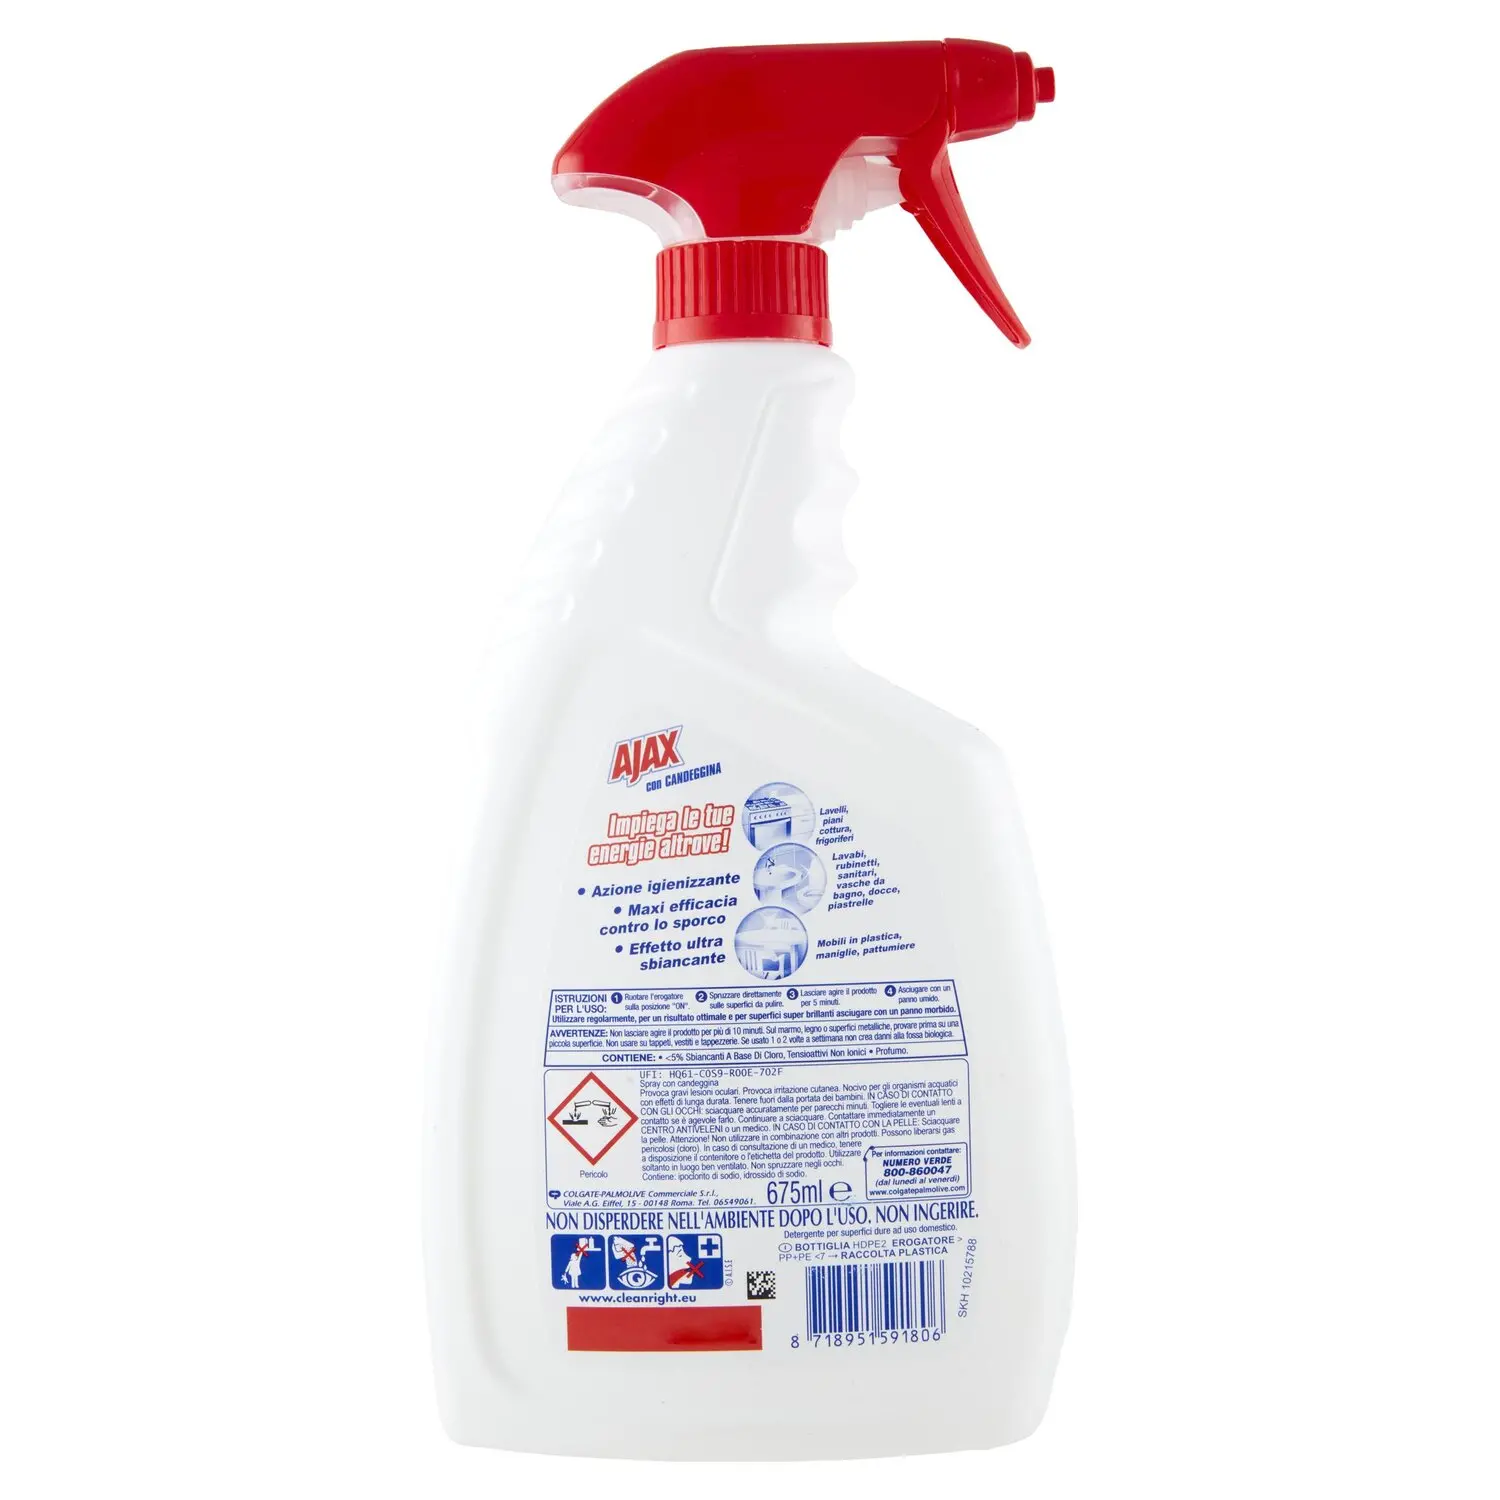 Ajax detersivo Spray con candeggina igienizzante, 675 ml